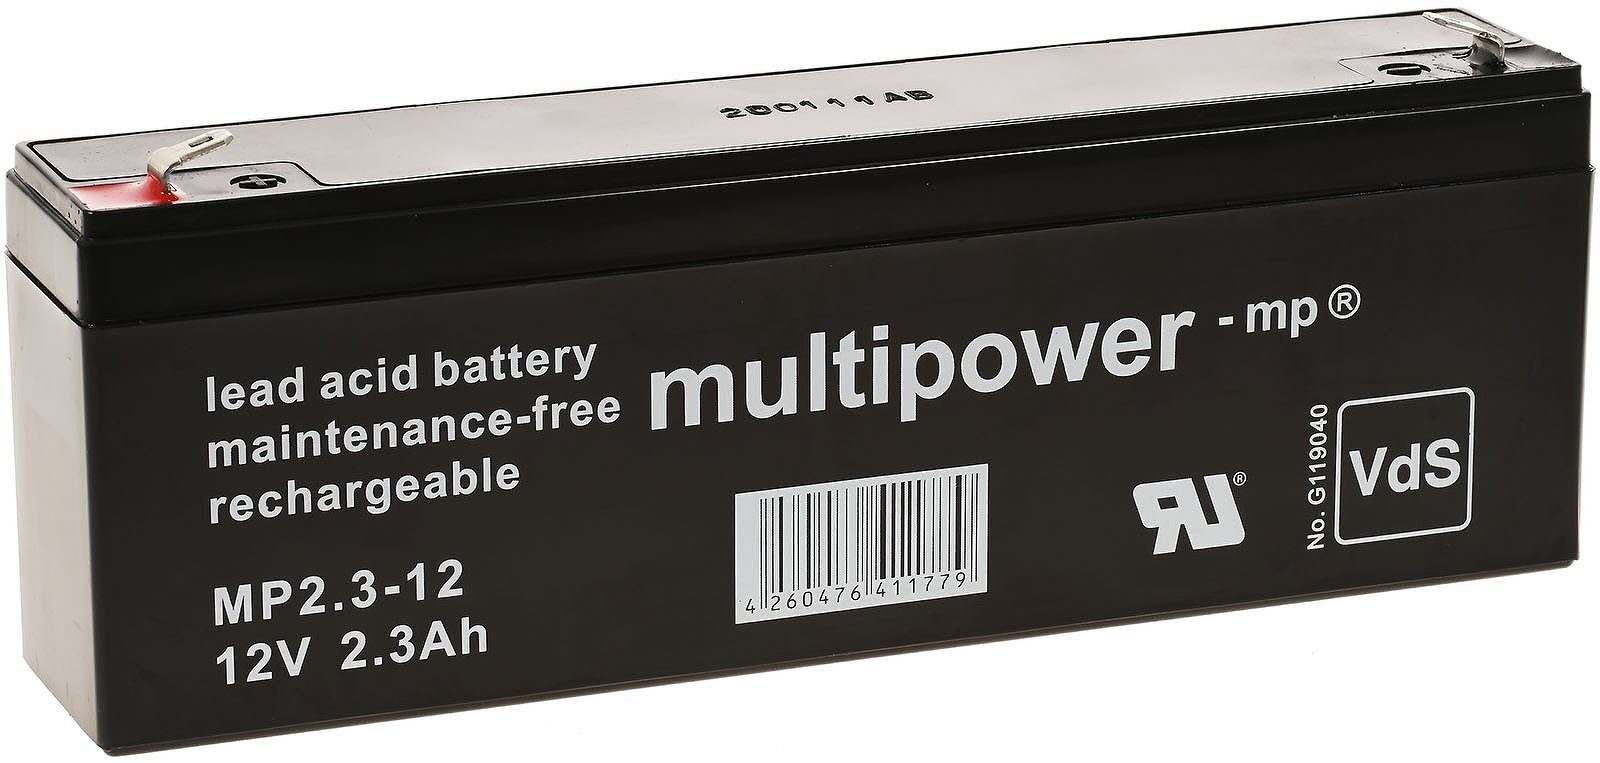 Vds (12 Bleiakku Powery (multipower) MP2.2-12 kompatibel zu Bleiakkus mAh V) 2300